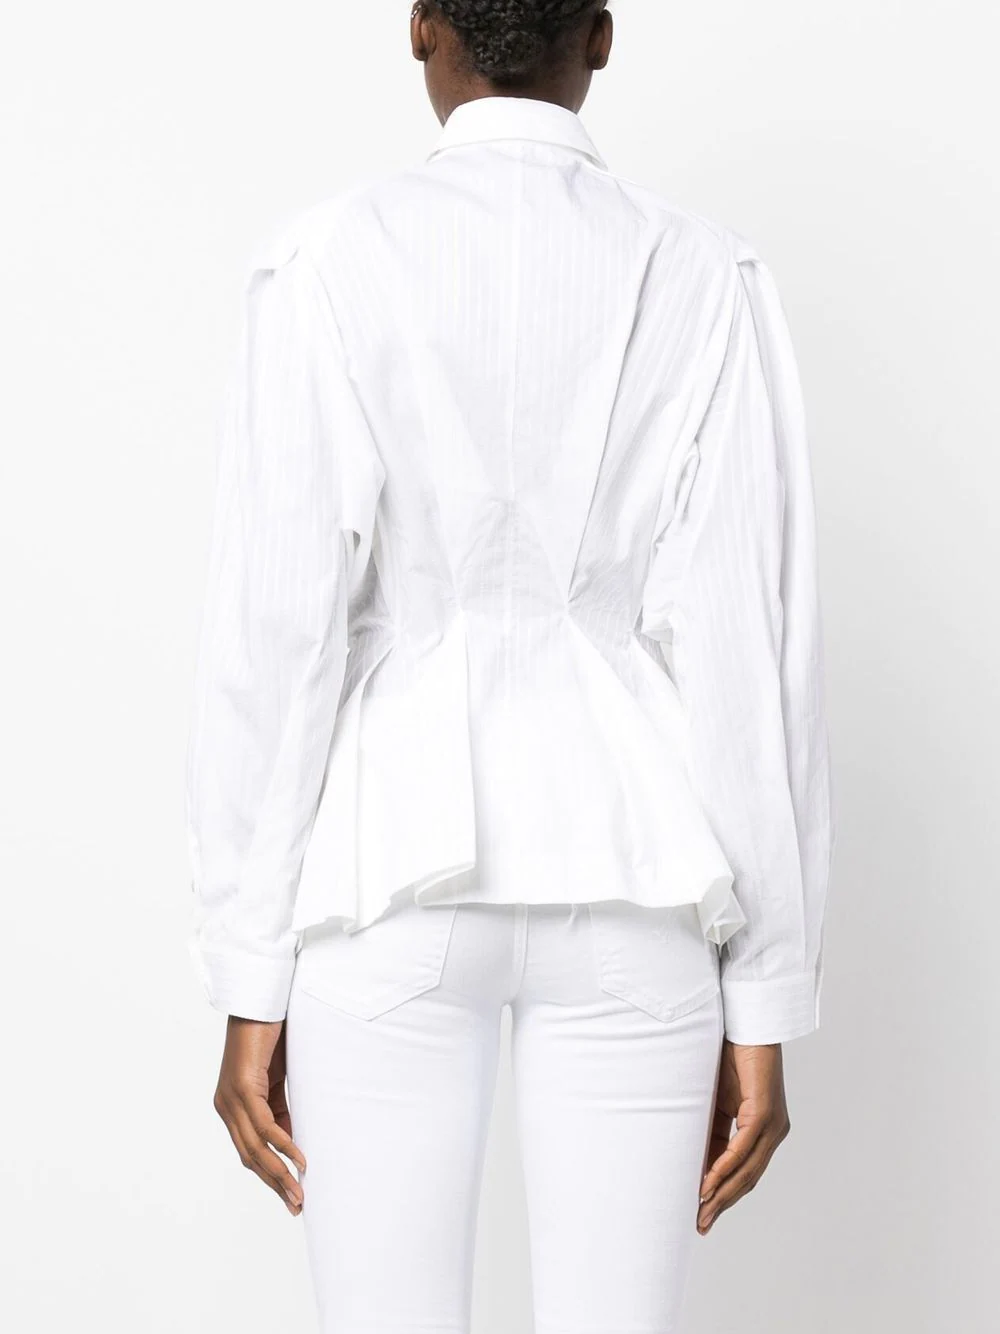 palmer-harding-Precision-Shirt-White-4